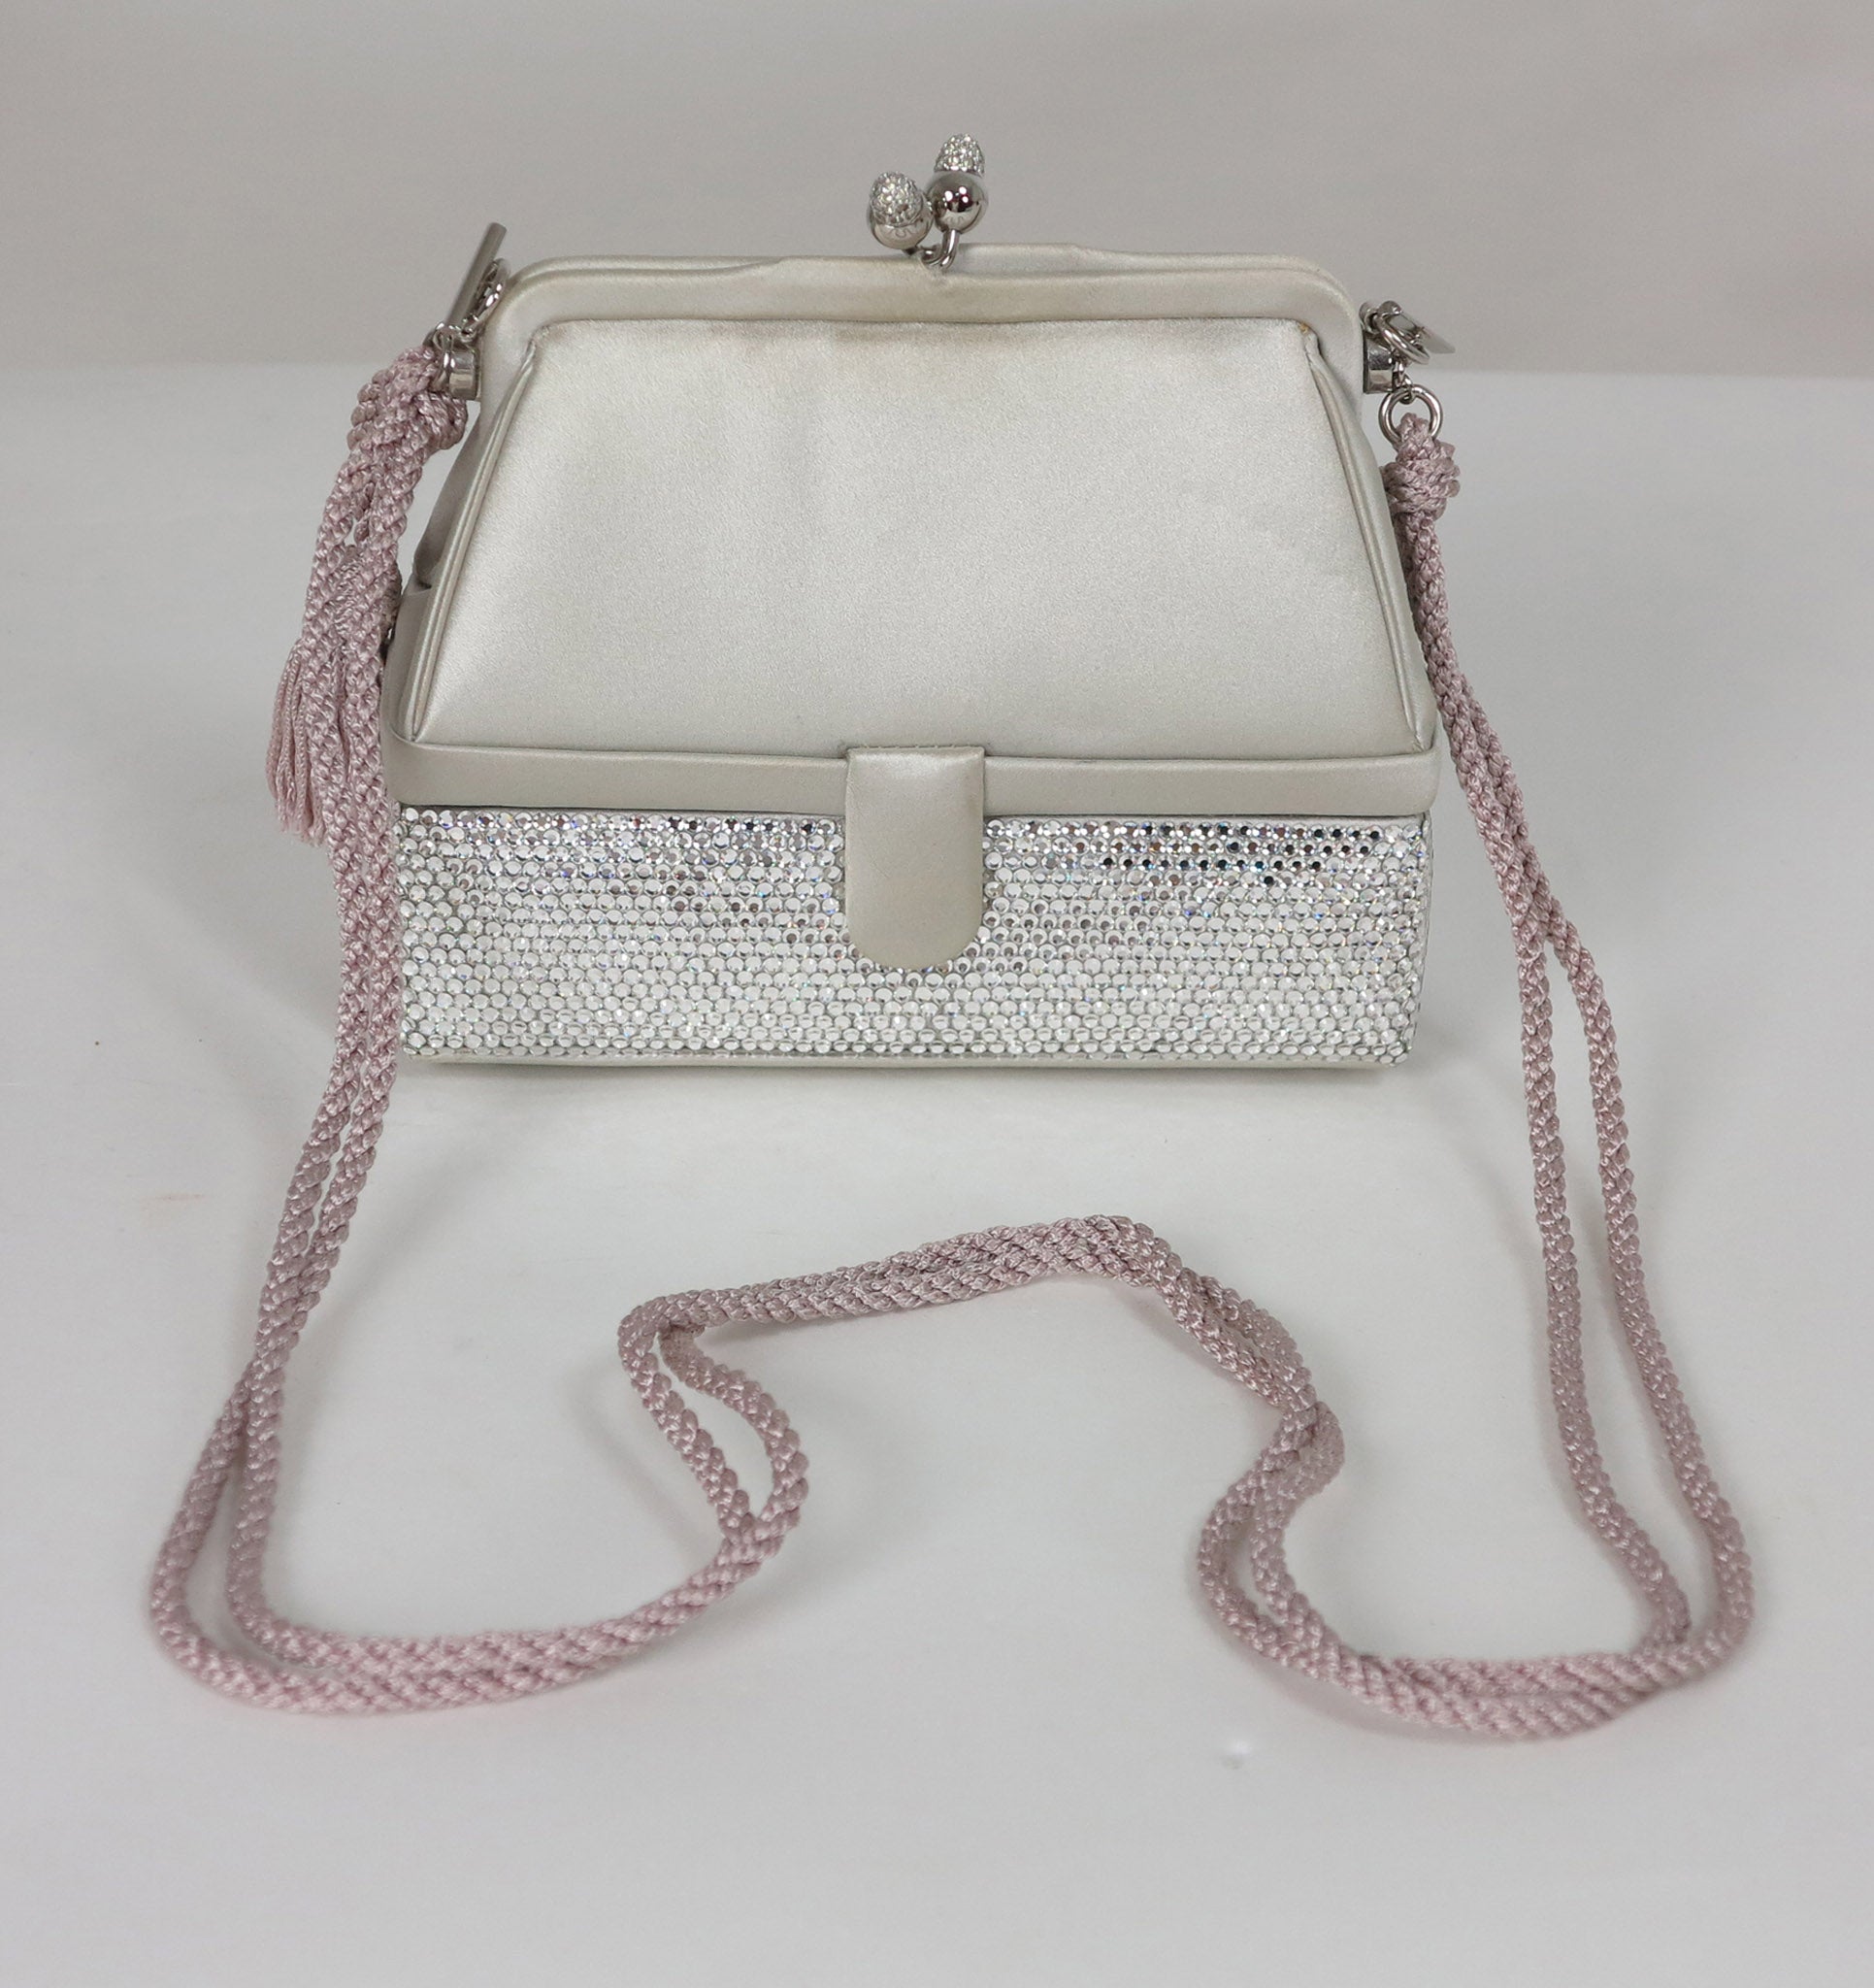 Sunrise Limited Edition Crystal Handbag by Judith Leiber